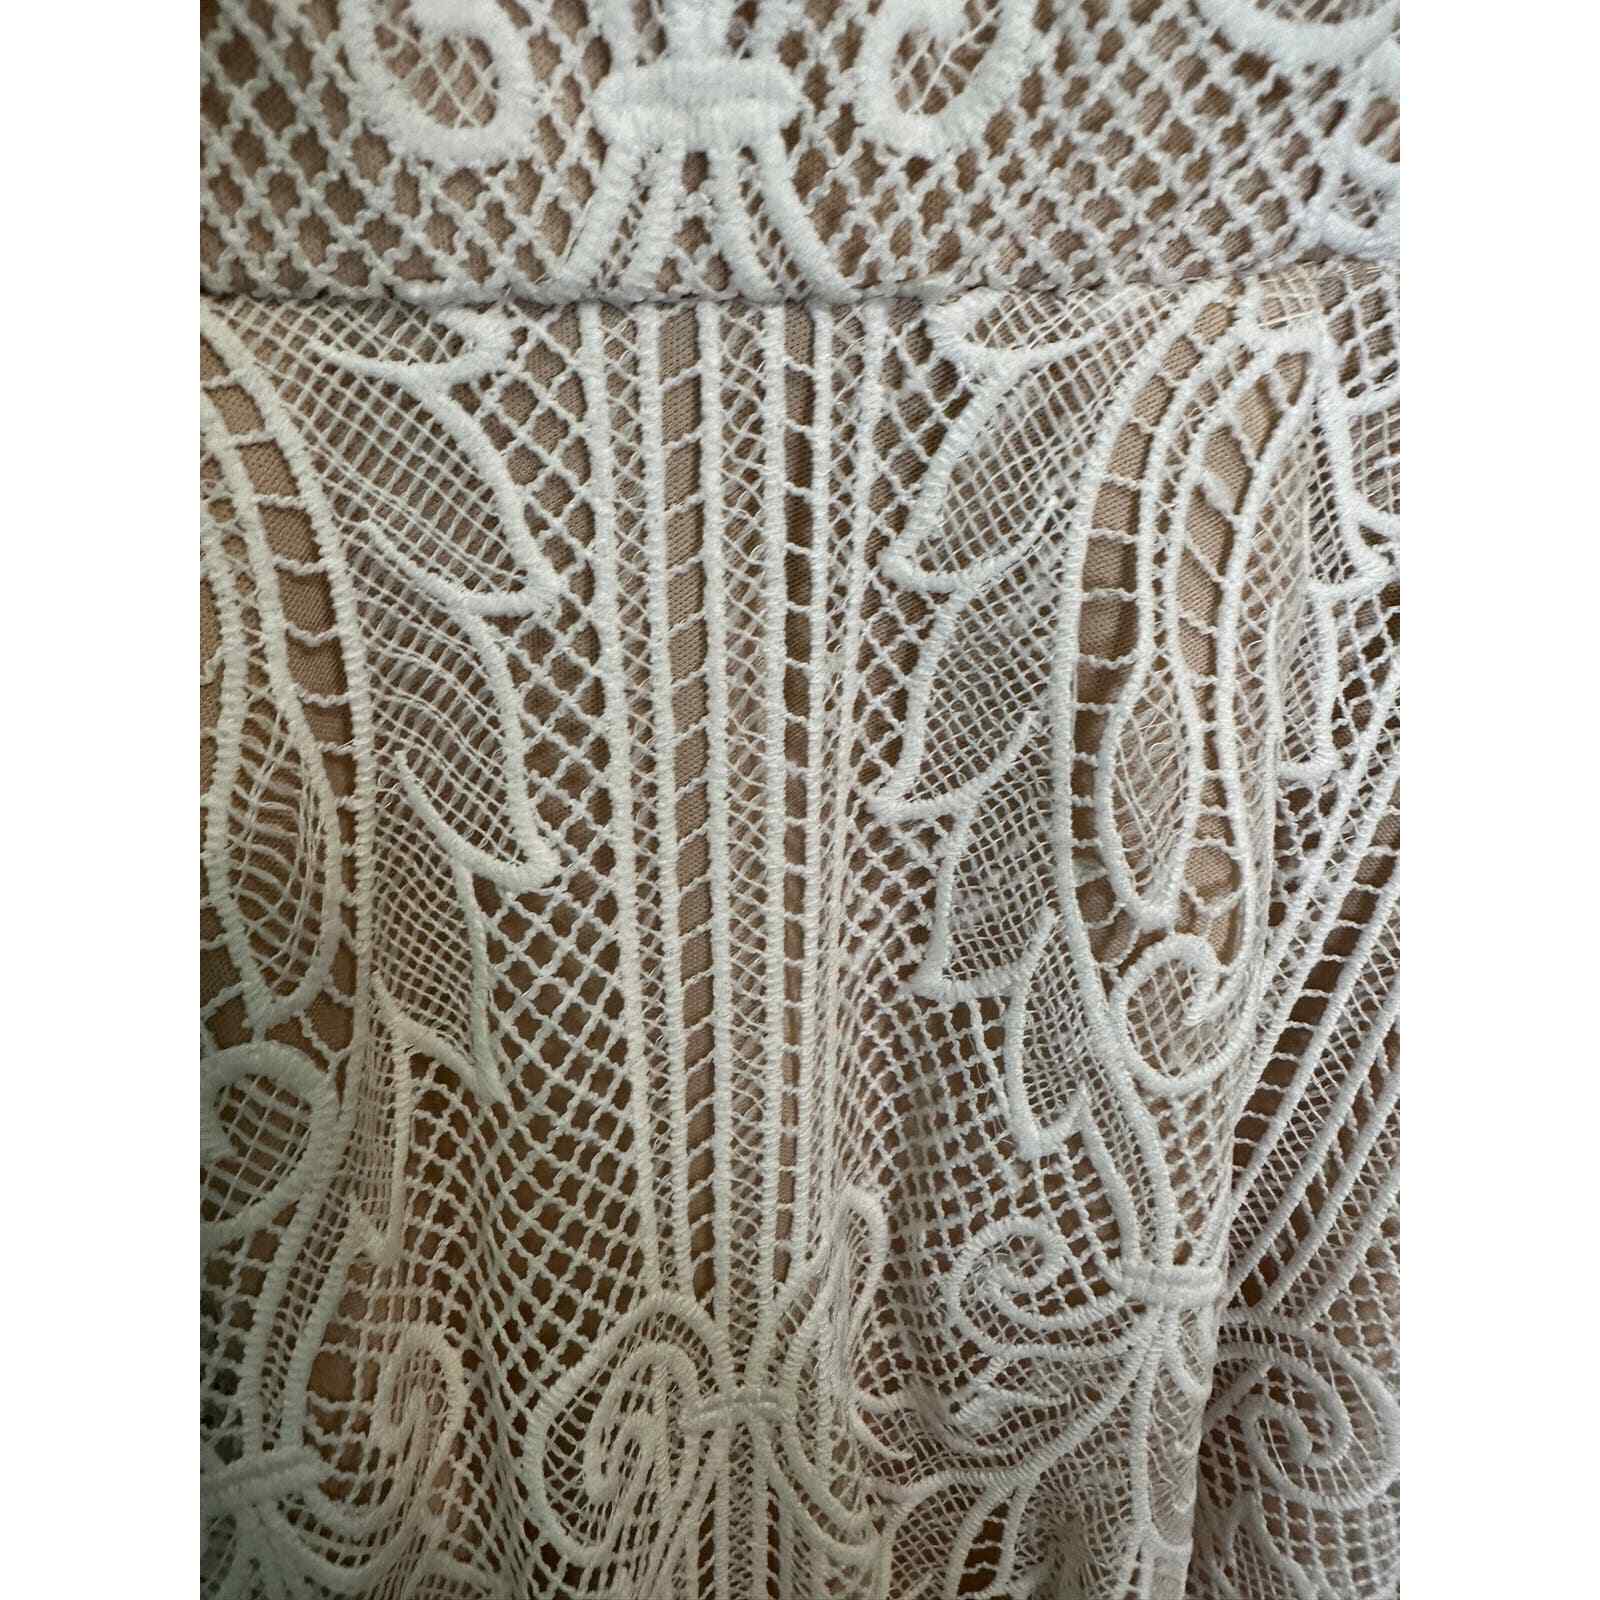 Liza Luxe for ModCloth Faith Flawless Maxi Medium White Lace Crochet Dress